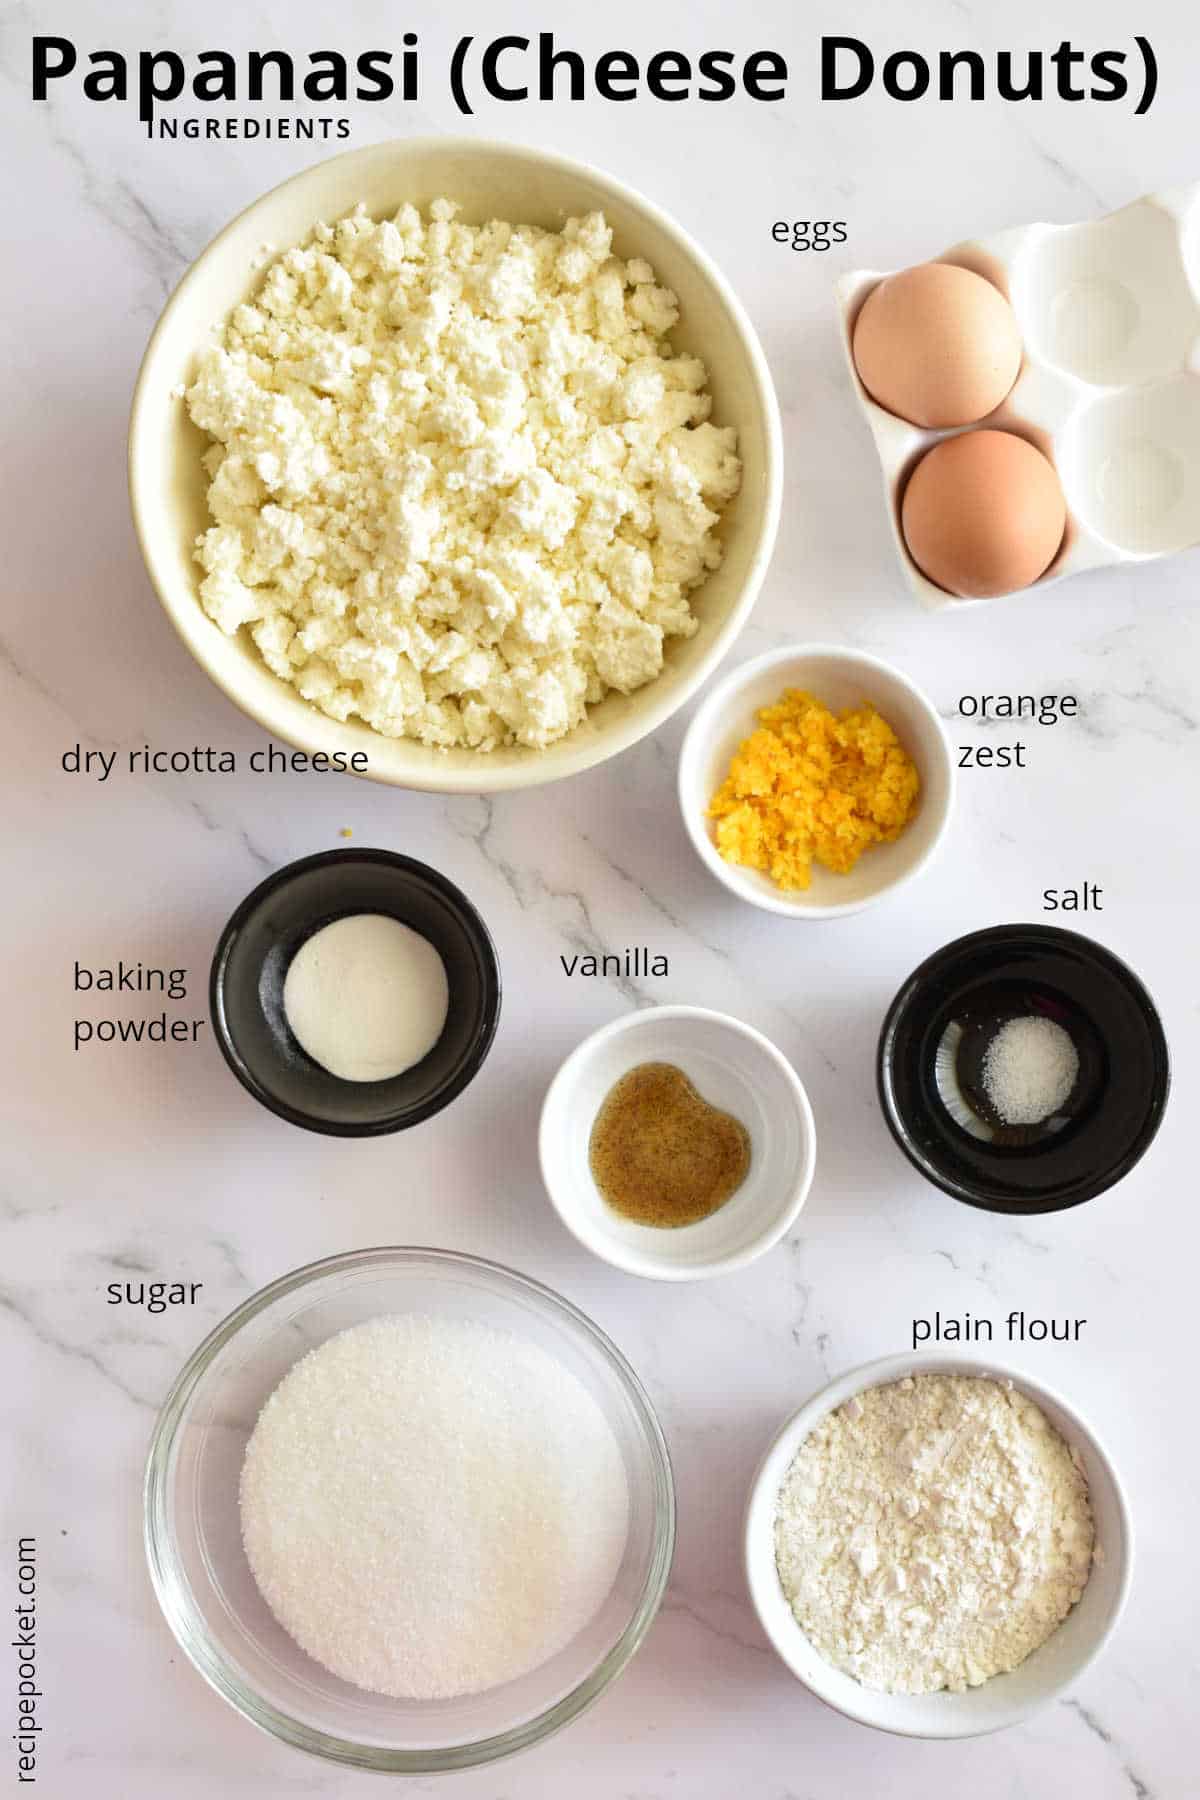 A photo showing the ingredients to make papanasi.